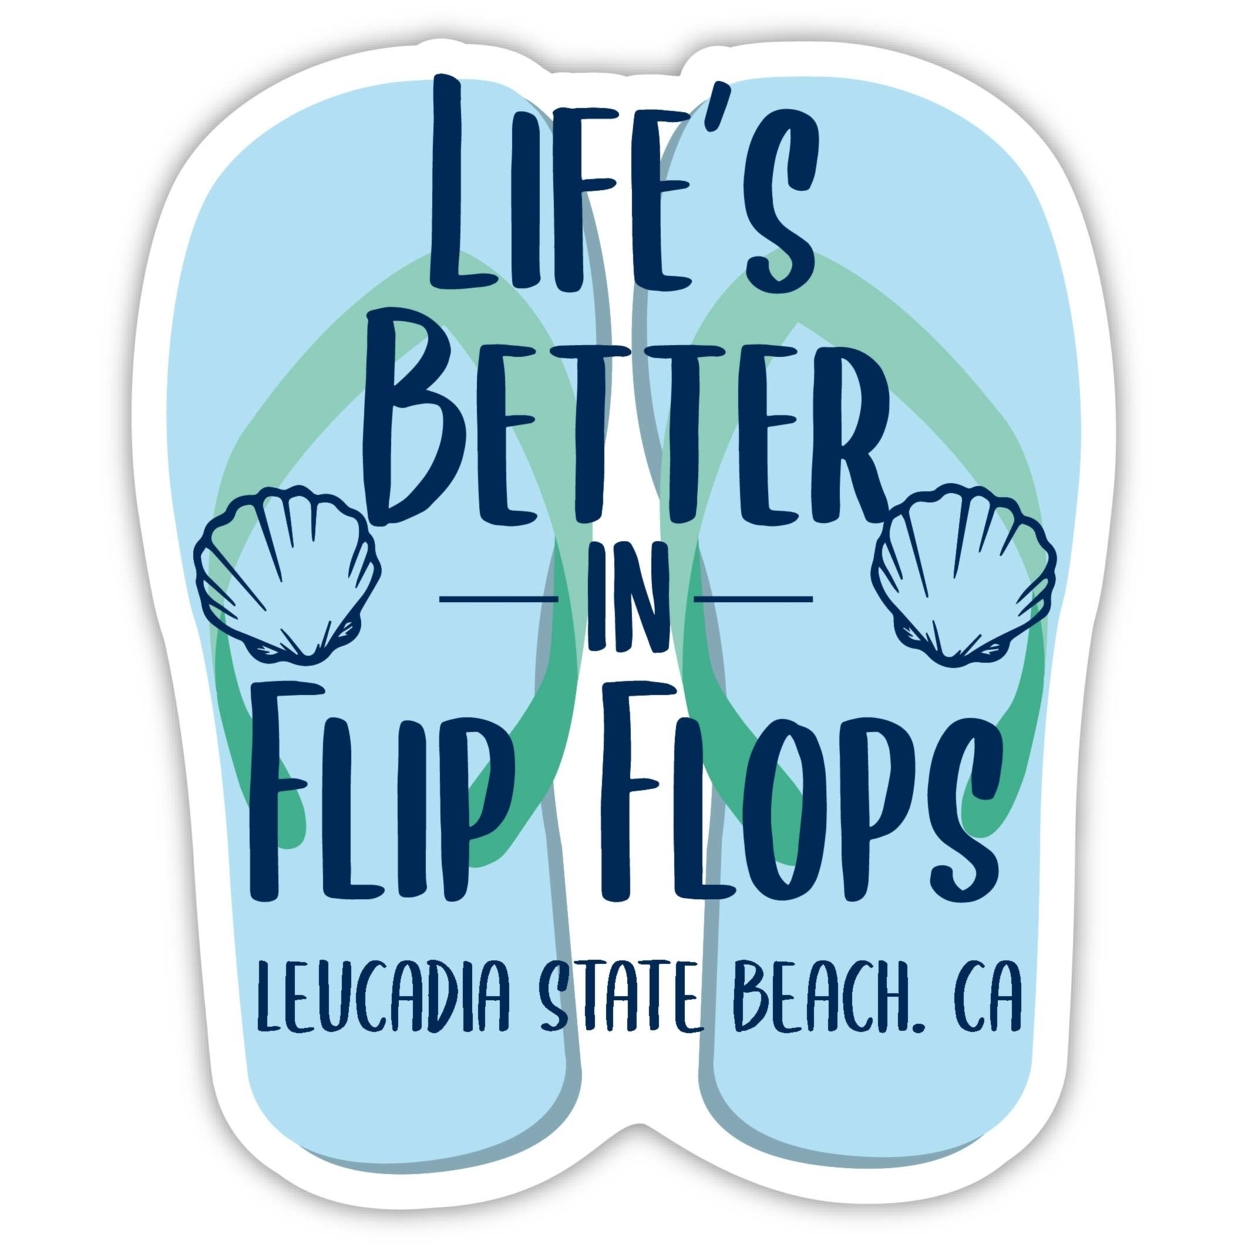 Leucadia State Beach California Souvenir 4 Inch Vinyl Decal Sticker Flip Flop Design